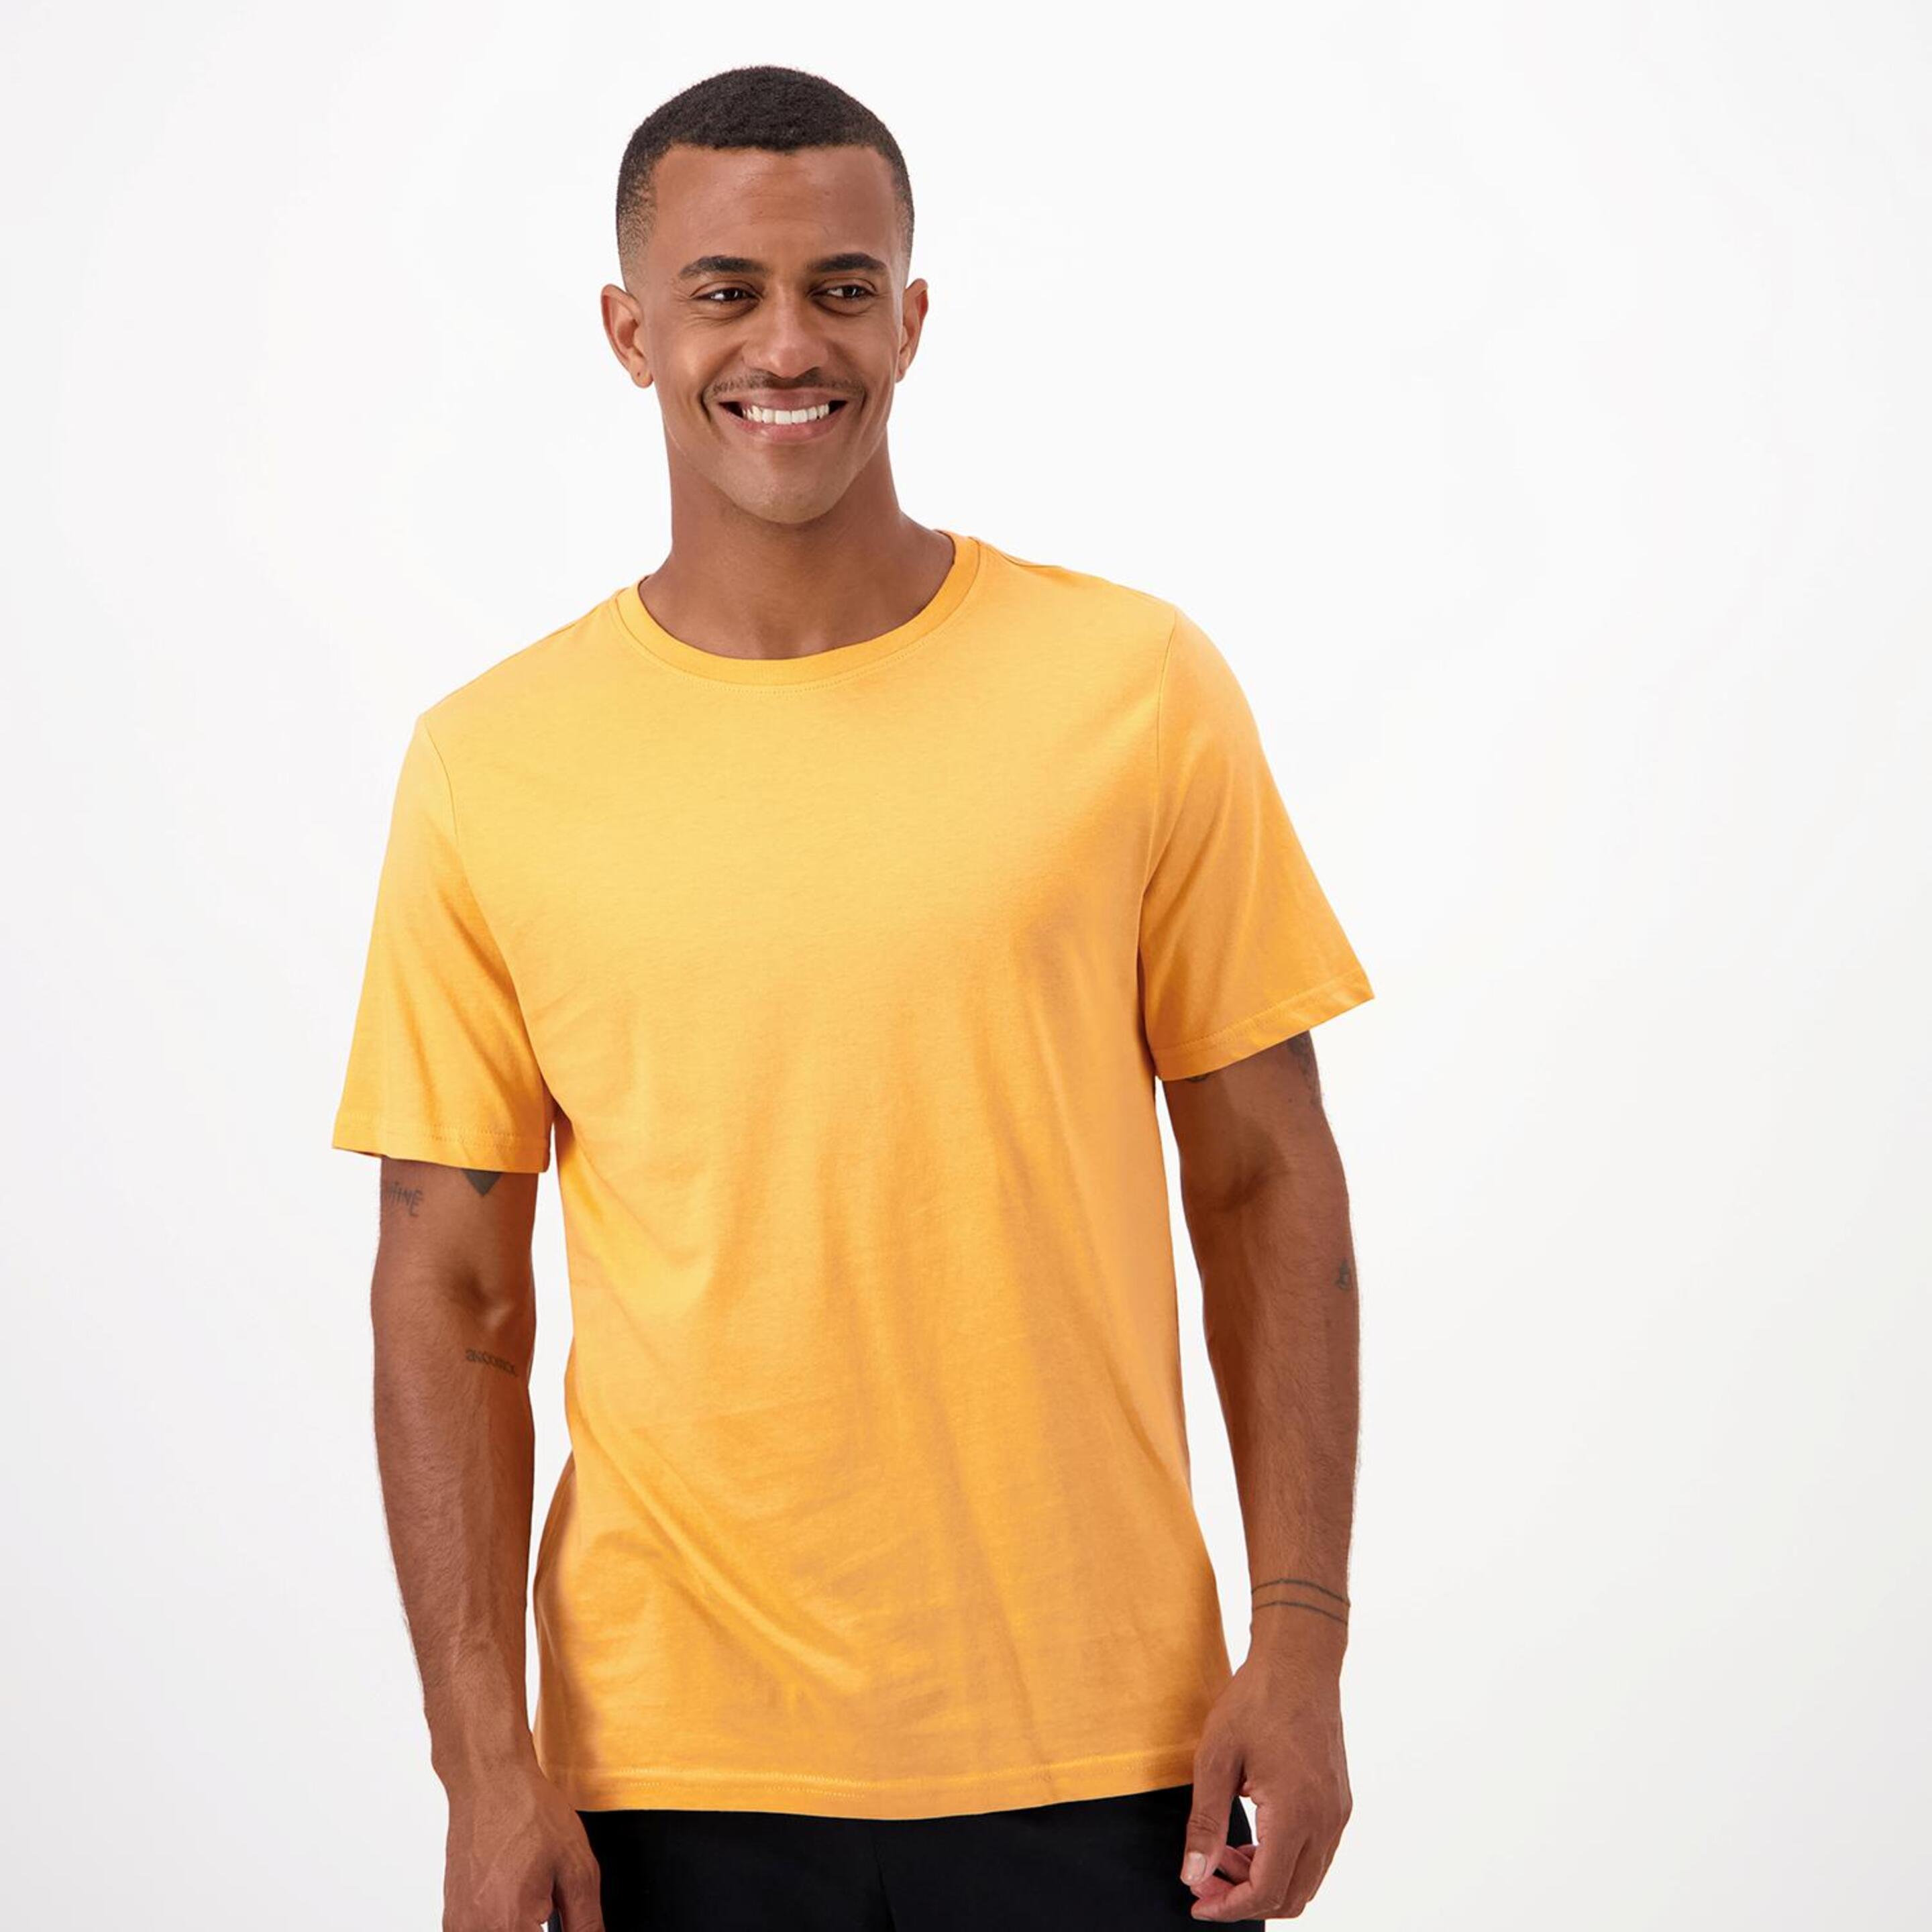 Up Basic - naranja - Camiseta Hombre